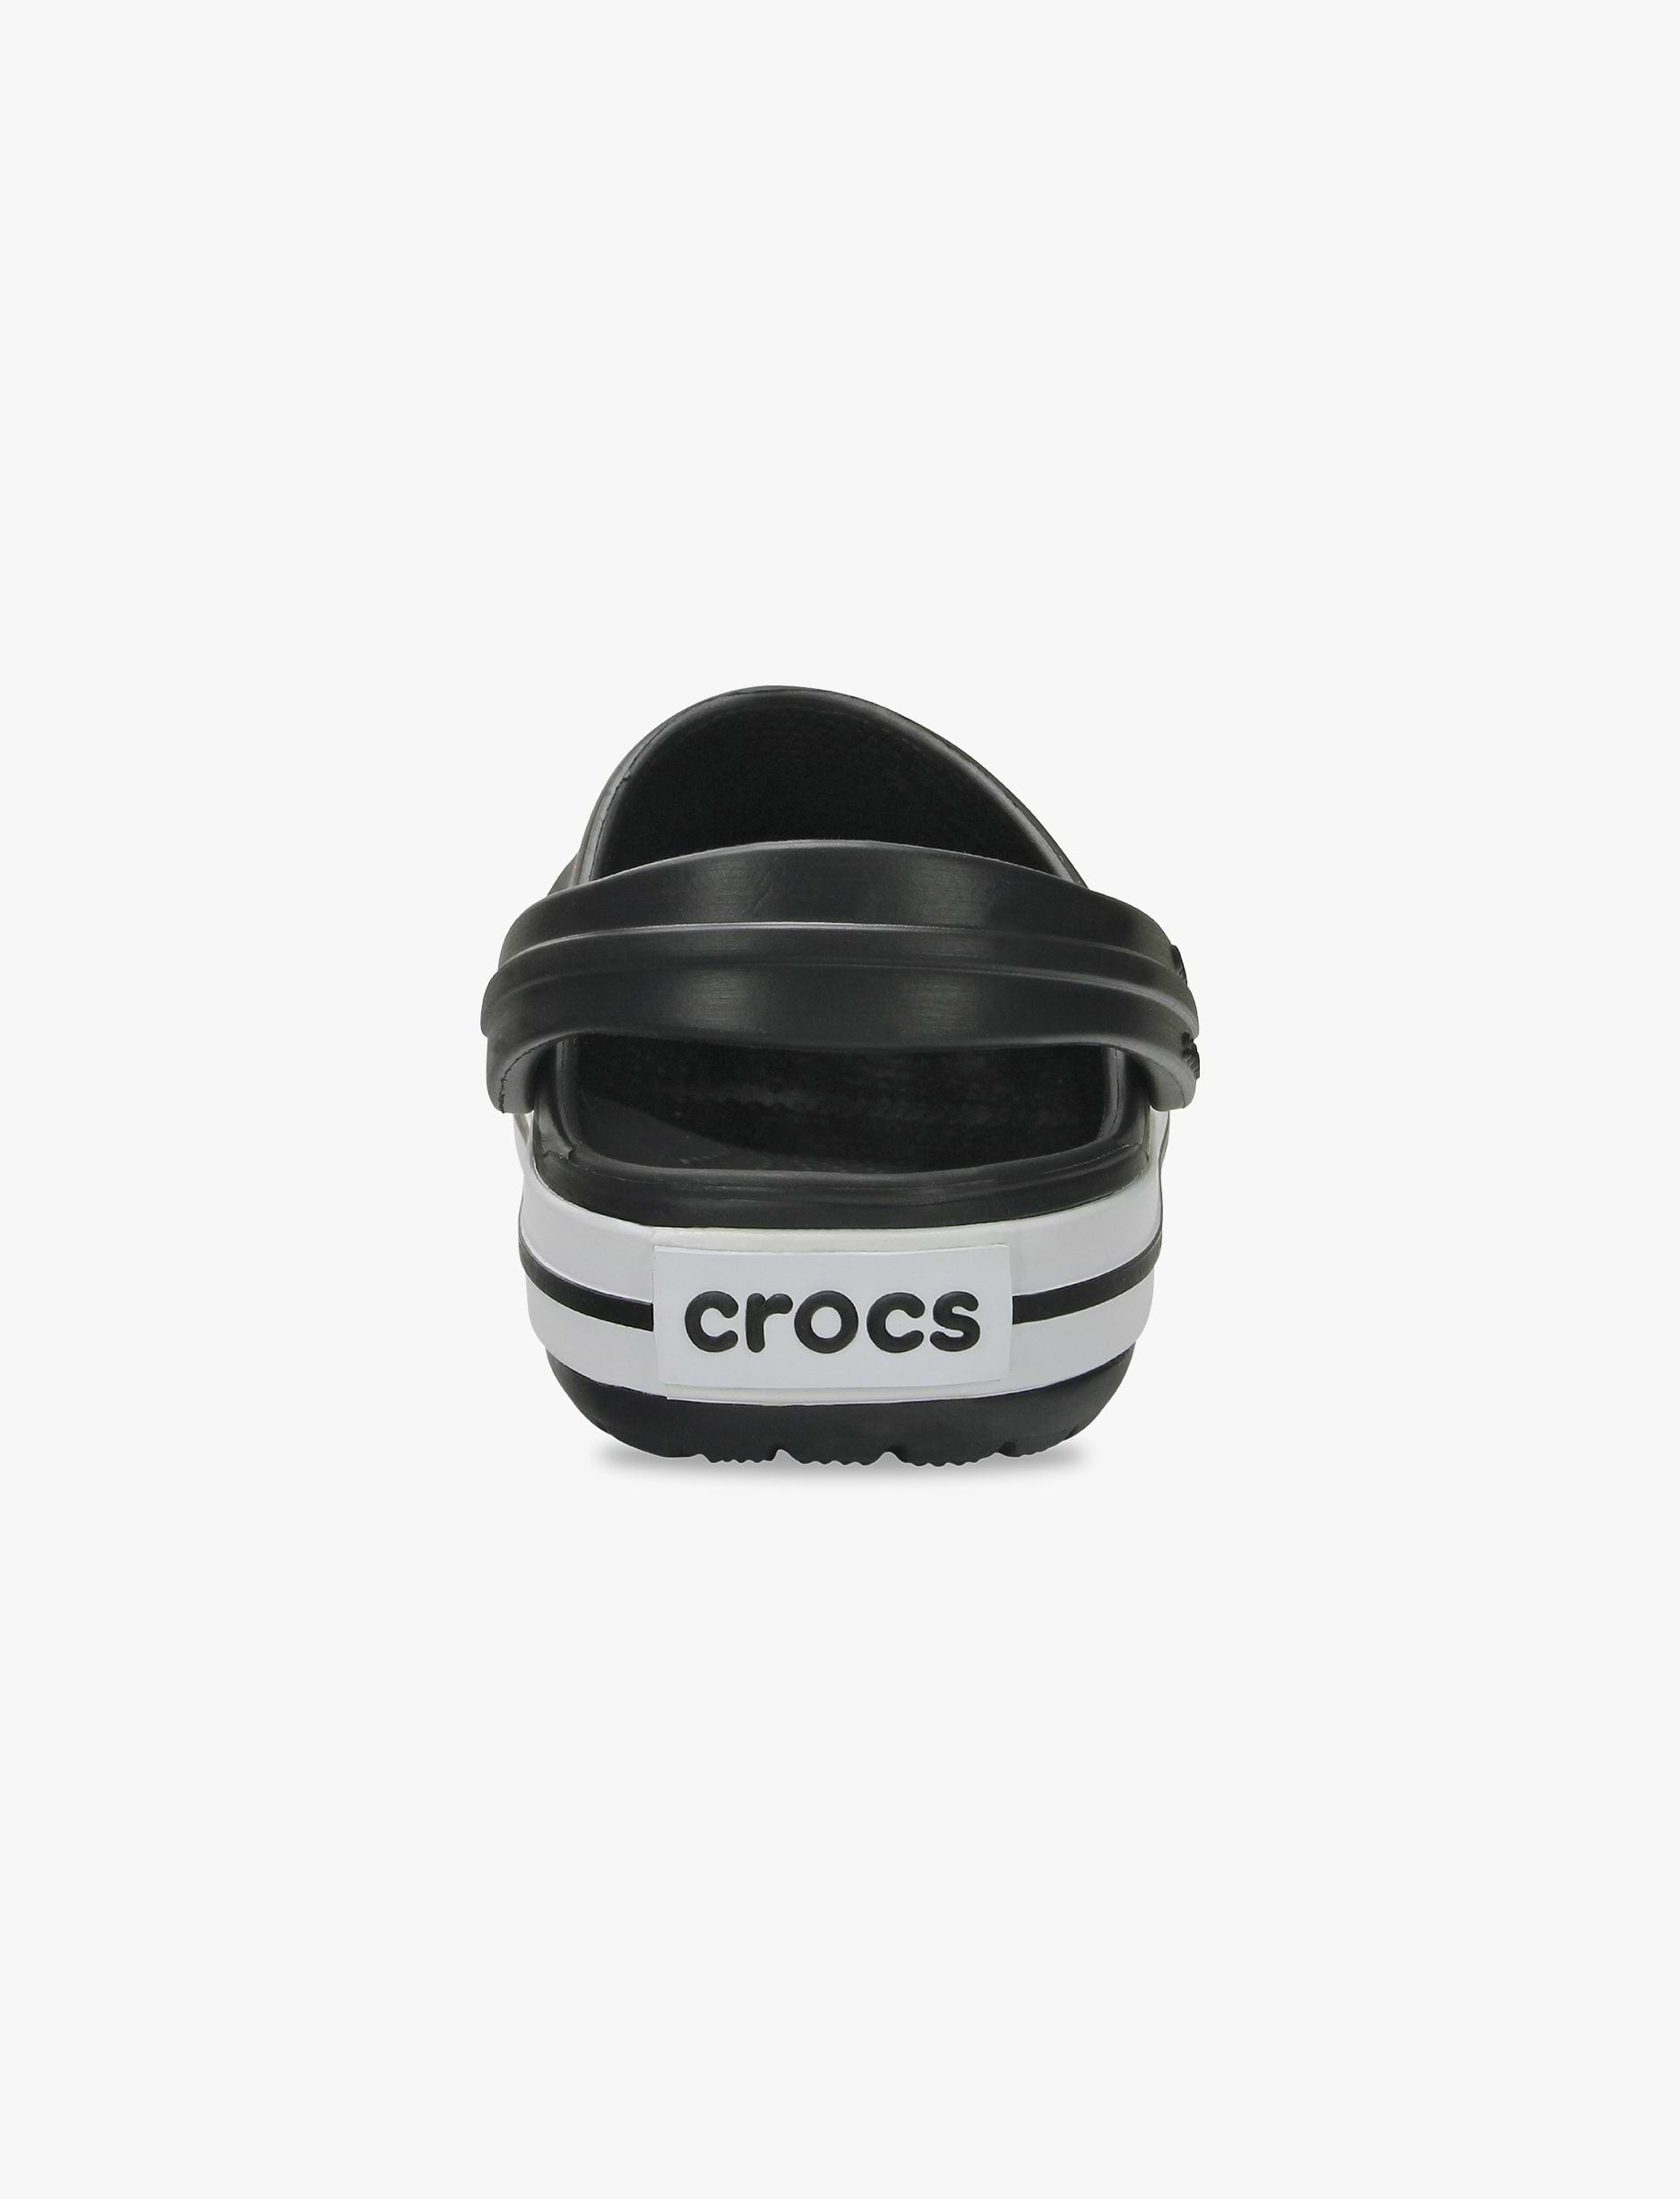 Crocs Crocband Clog K - כפכפי קרוקבנד קרוקס לילדים